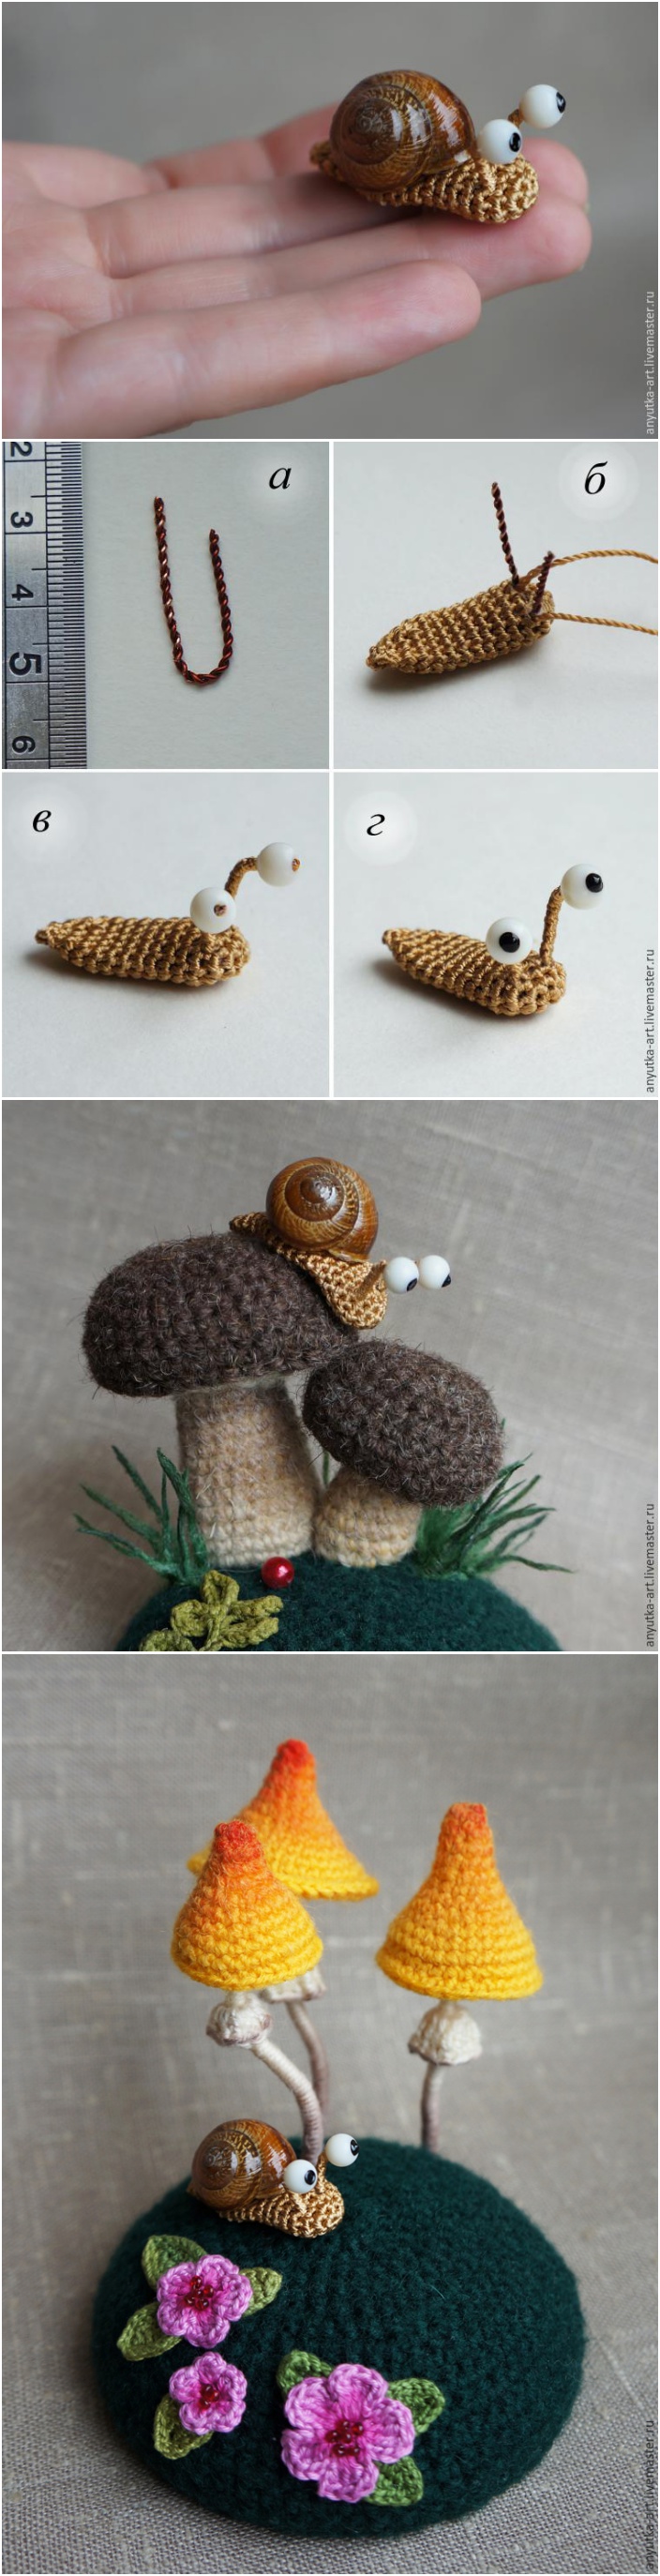 Crochet Snail with Free Pattern